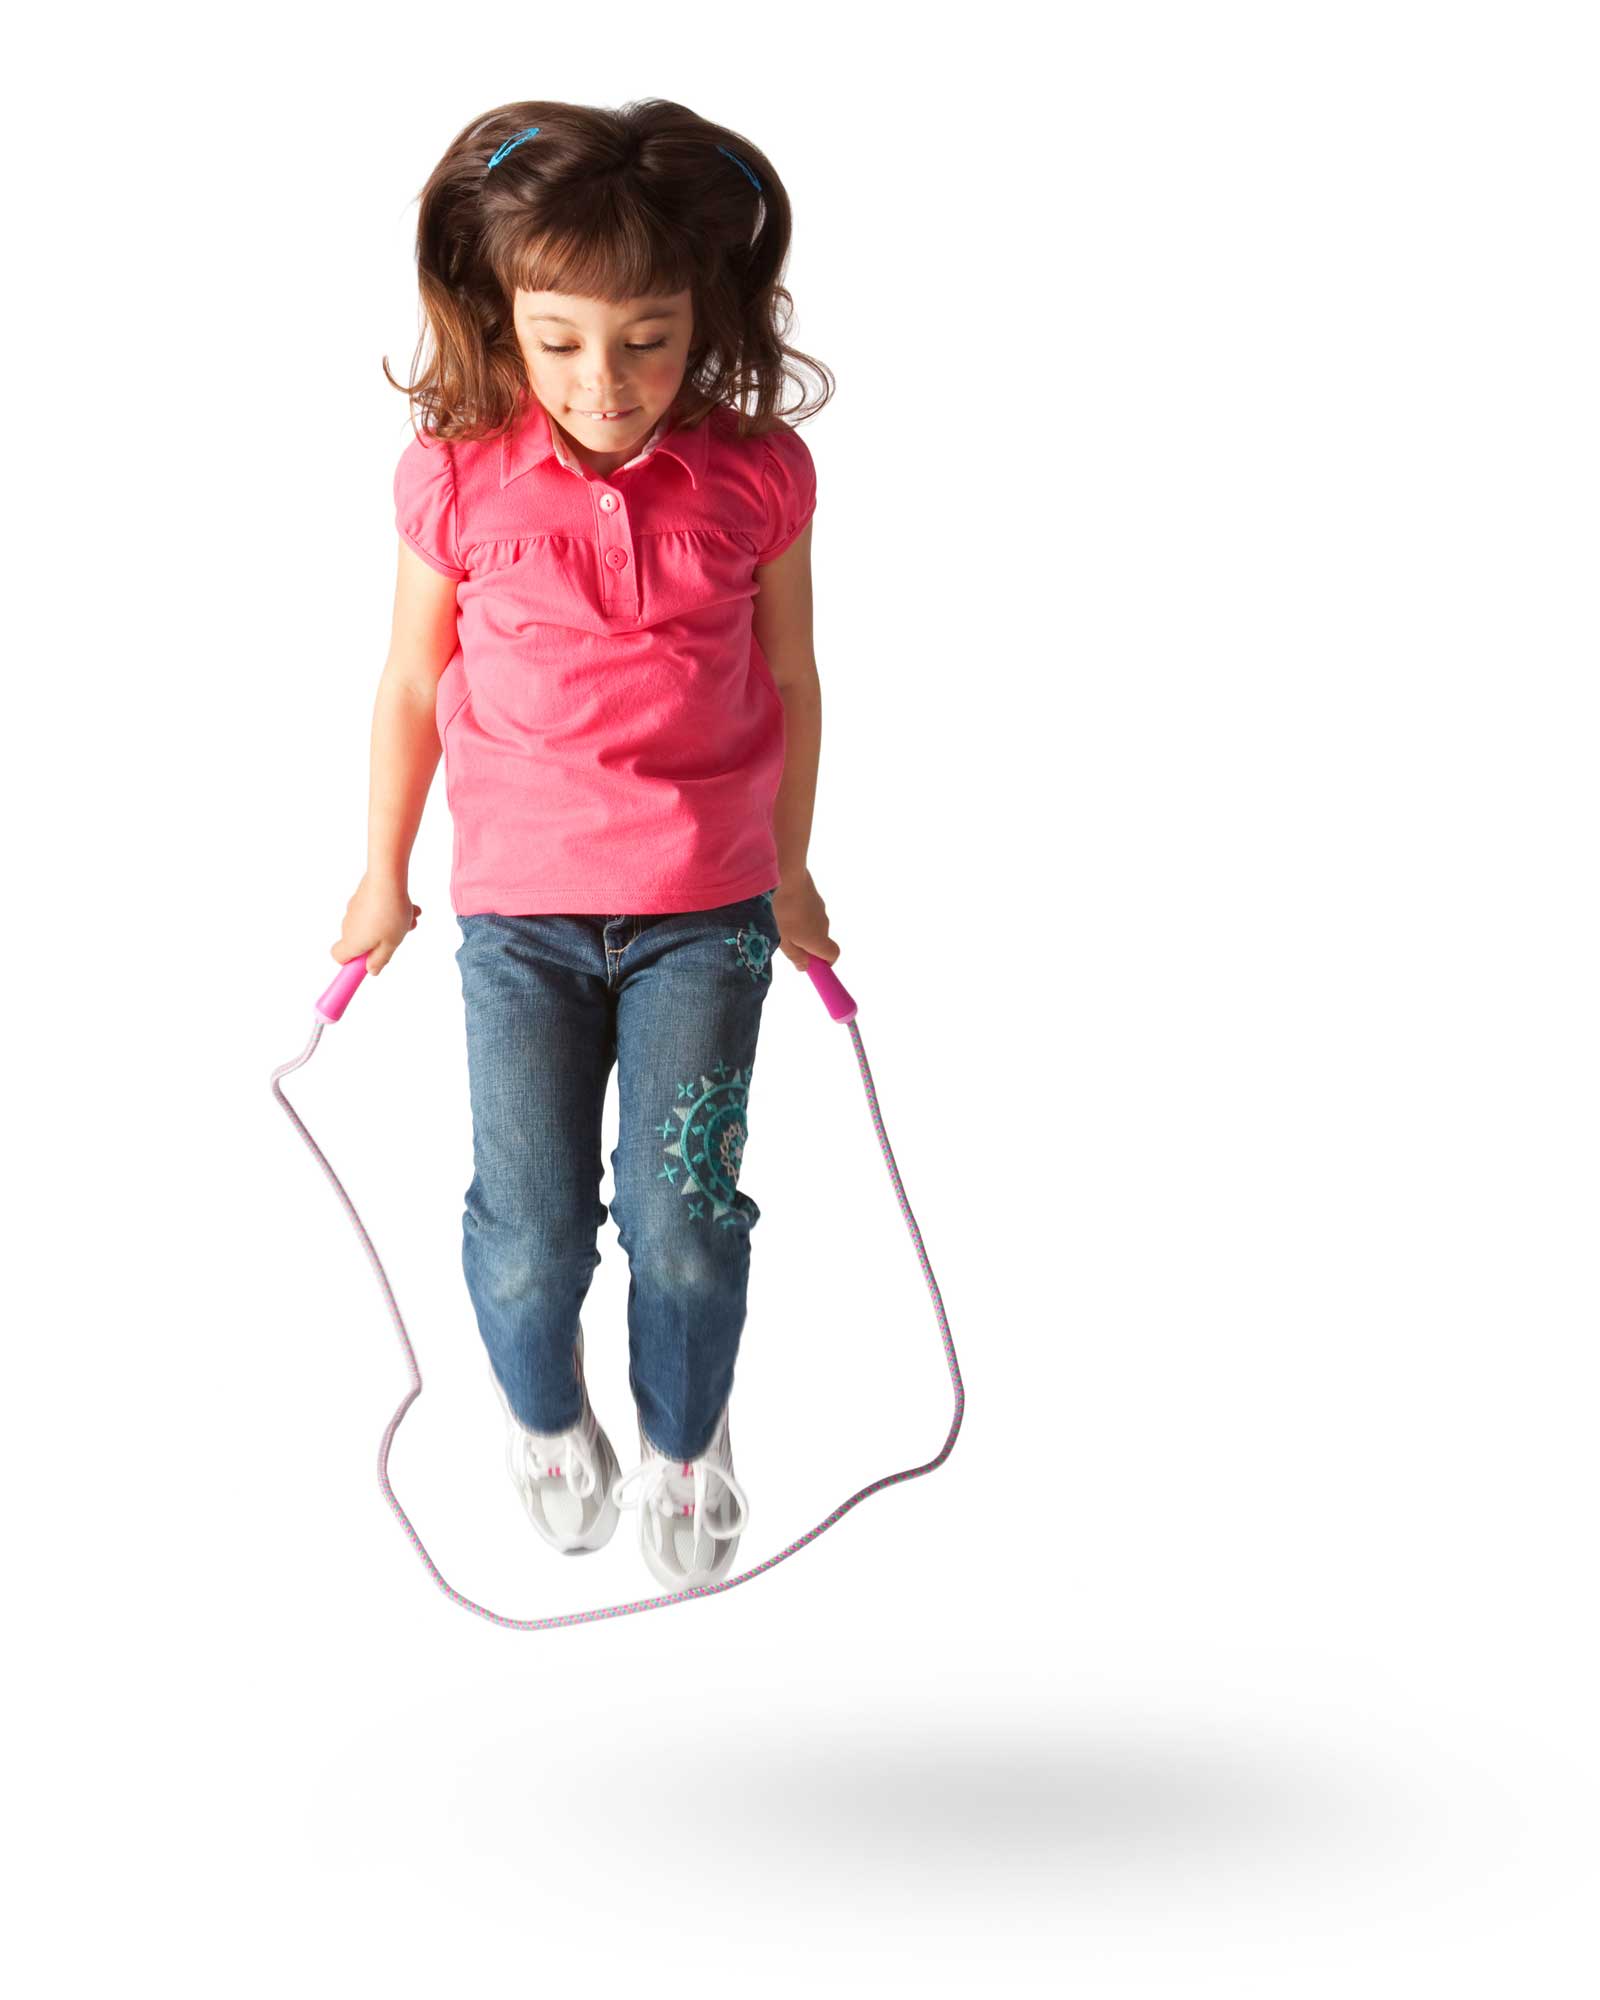 Little girl jumping rope.